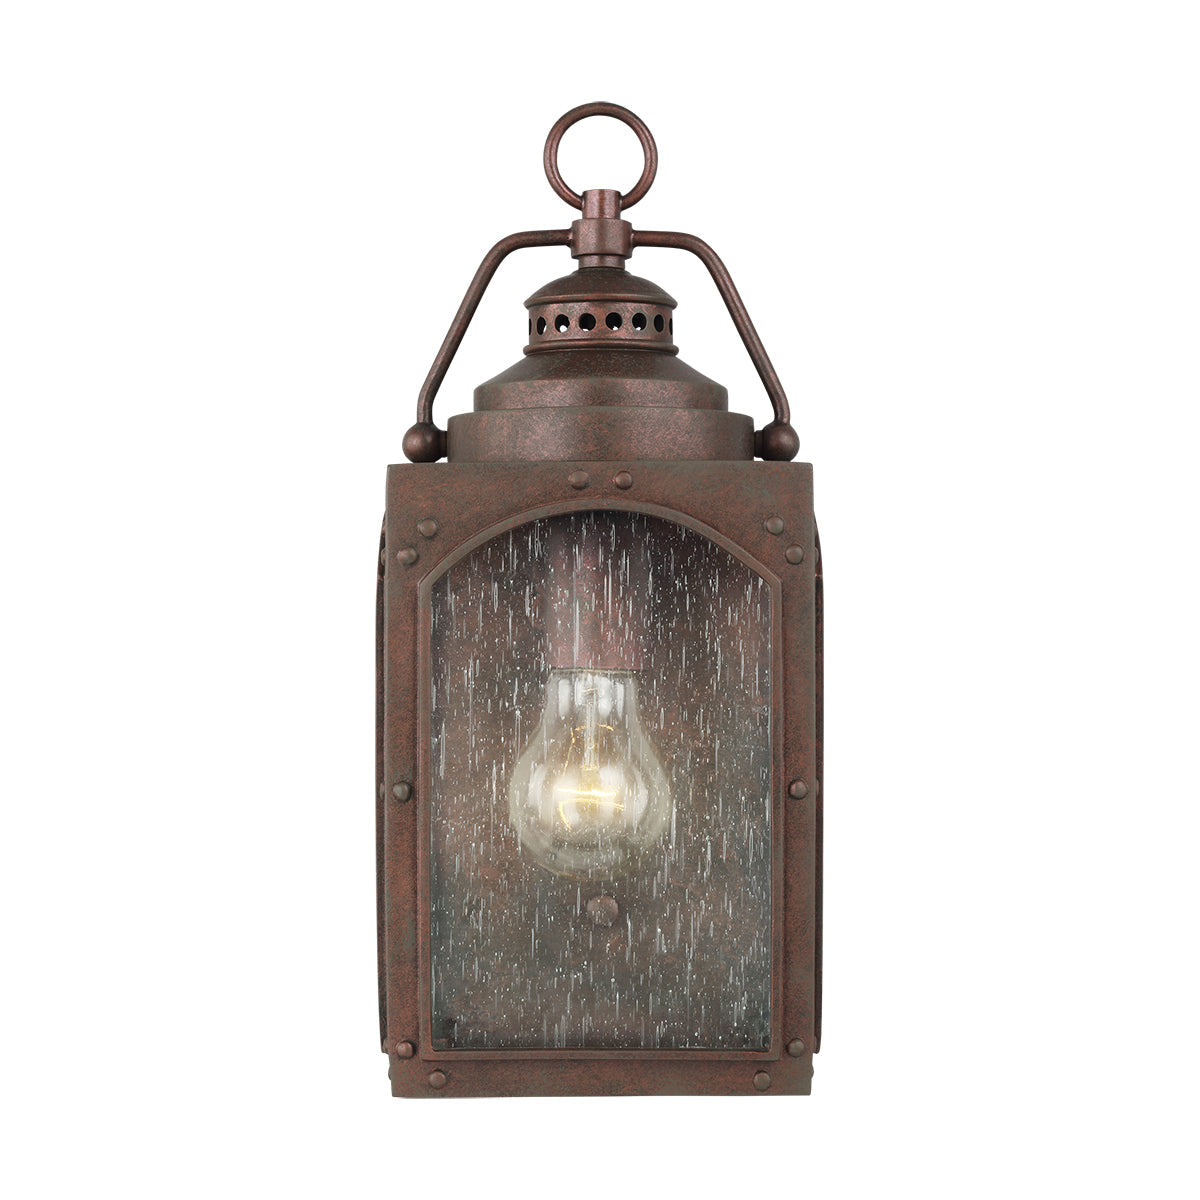 Randhurst Small Wall Lantern - Copper Oxide Finish